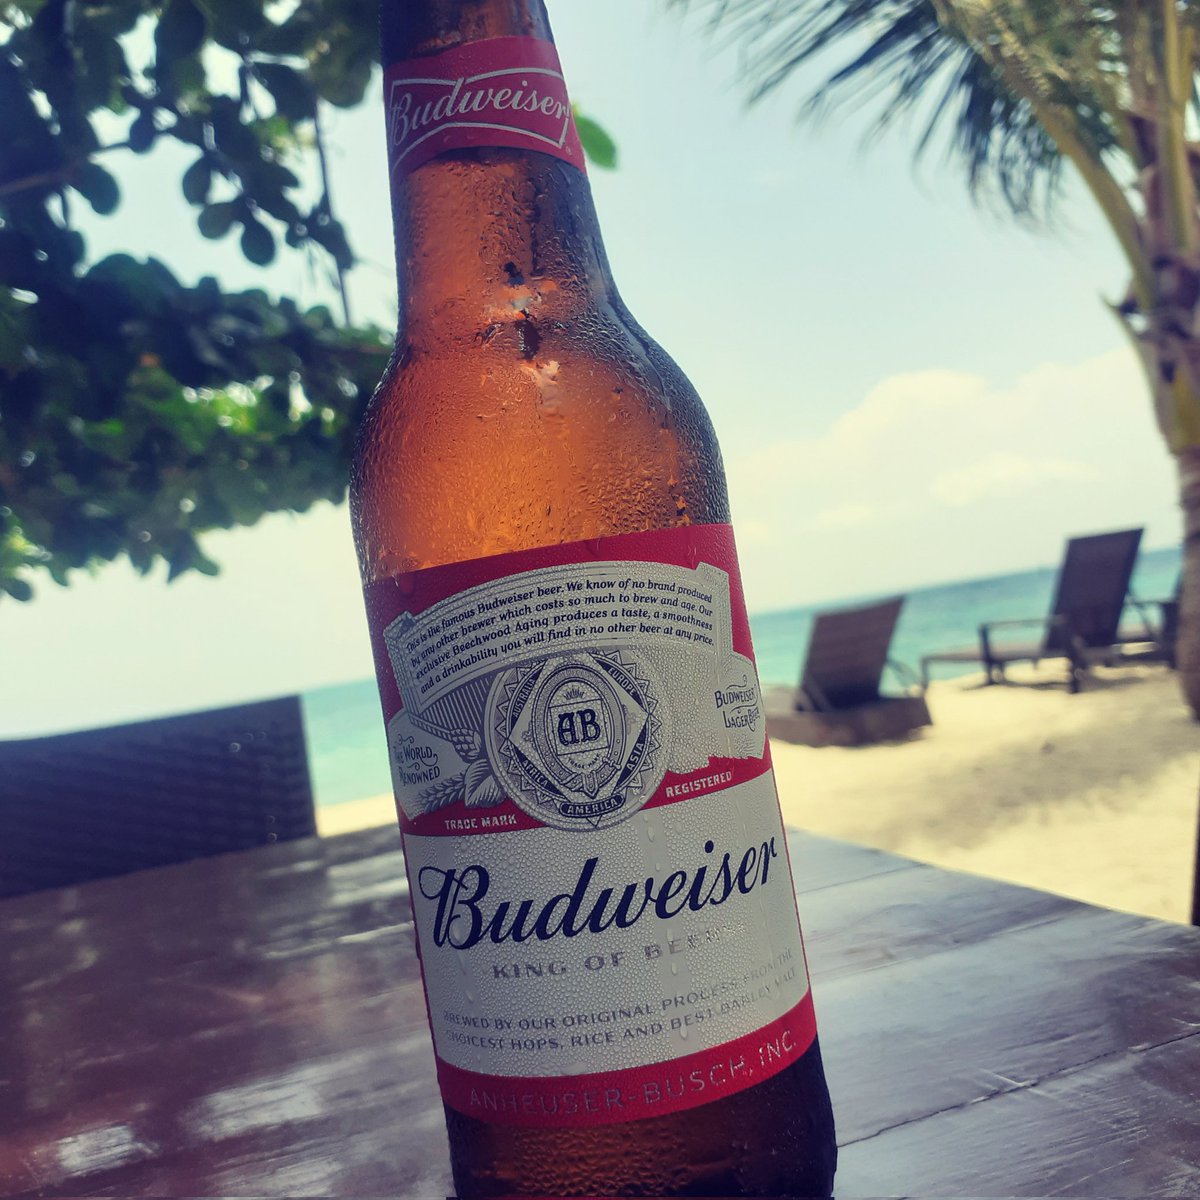 Bud by the sea. Need I say more?

#beverage #drinks #beerculture #beerlover #beer #beerstagram #beer🍺 #beerphotography #beerph 

#cominghome #islandlife #vacation #summerbreak #travel #travelpost